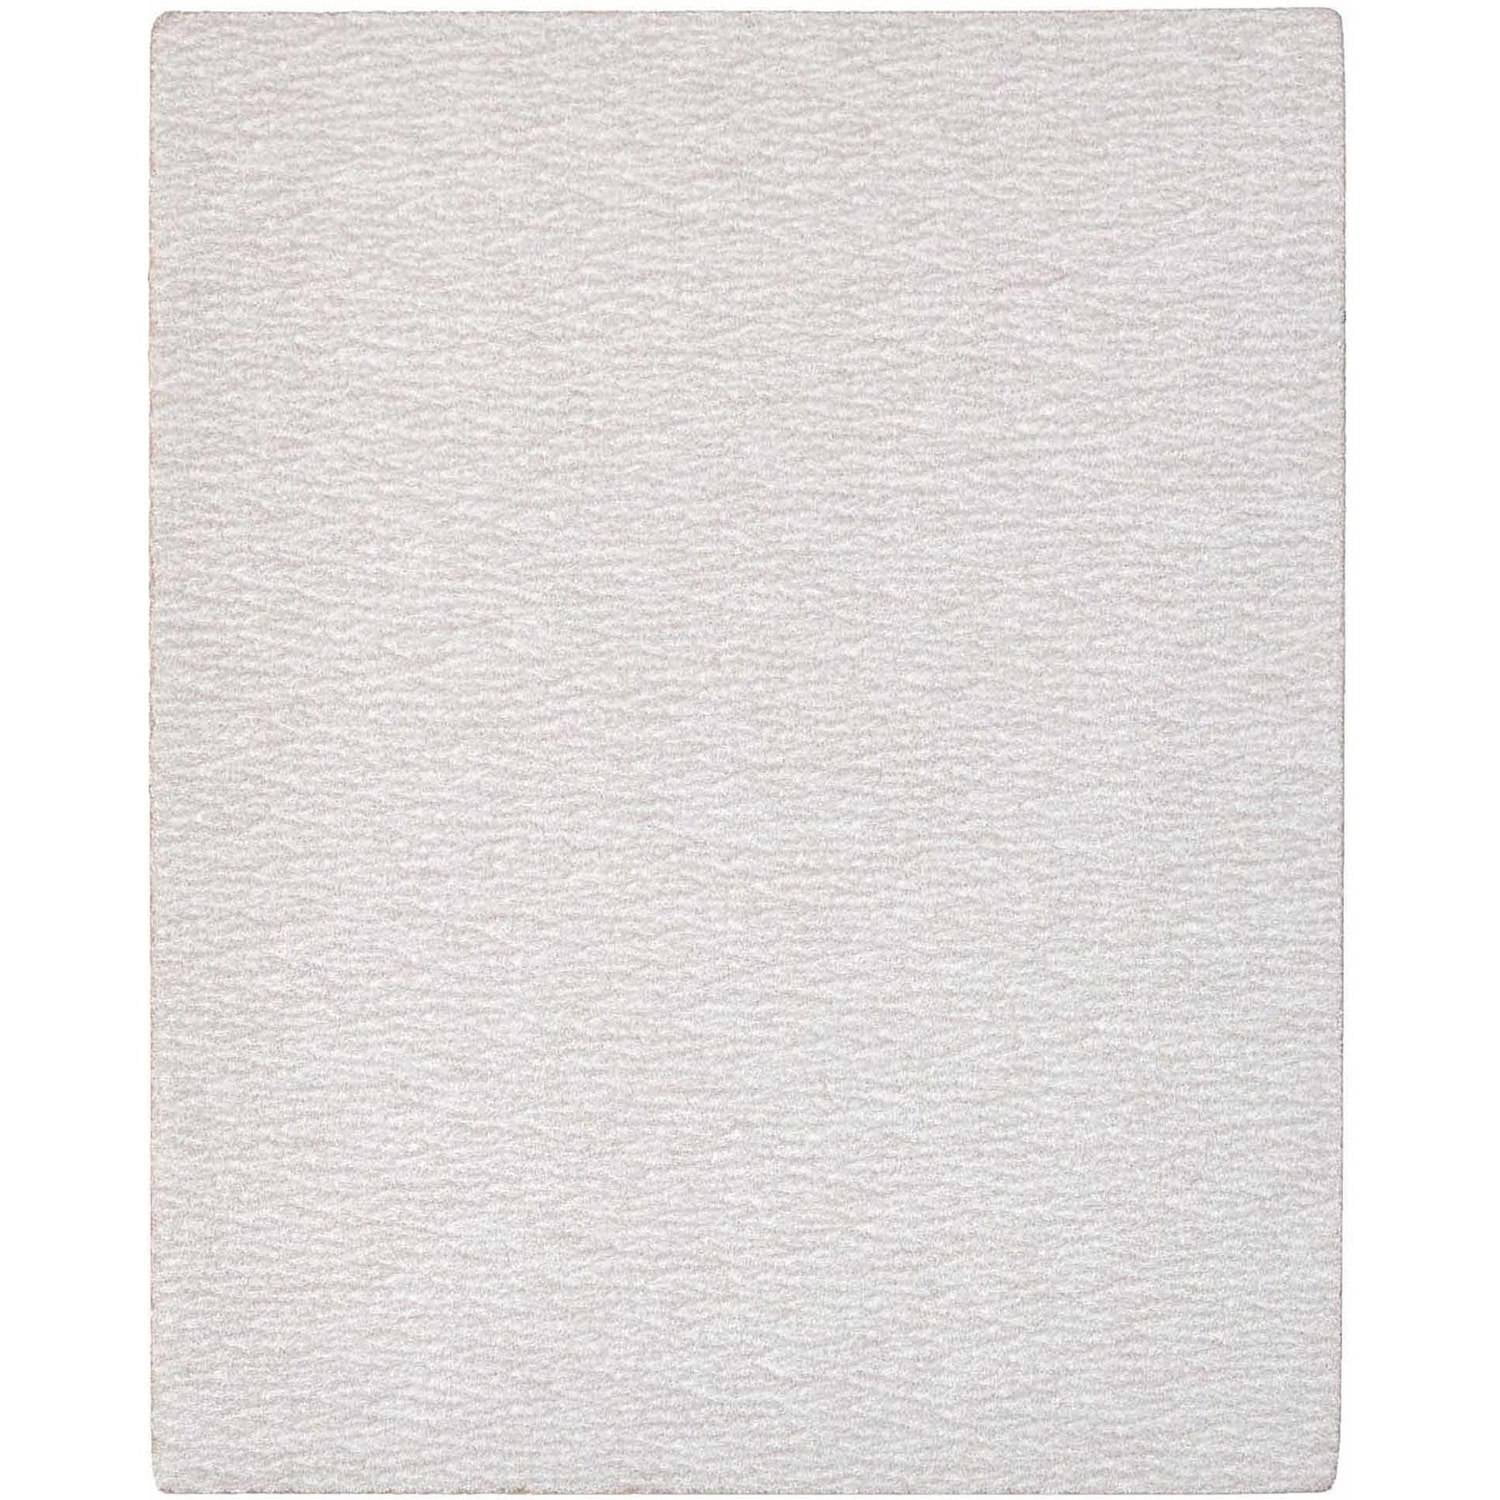 ALEKO 120 Grit Sandpaper Sheets 3.7 x 9 In 50 Pieces Grey Color 